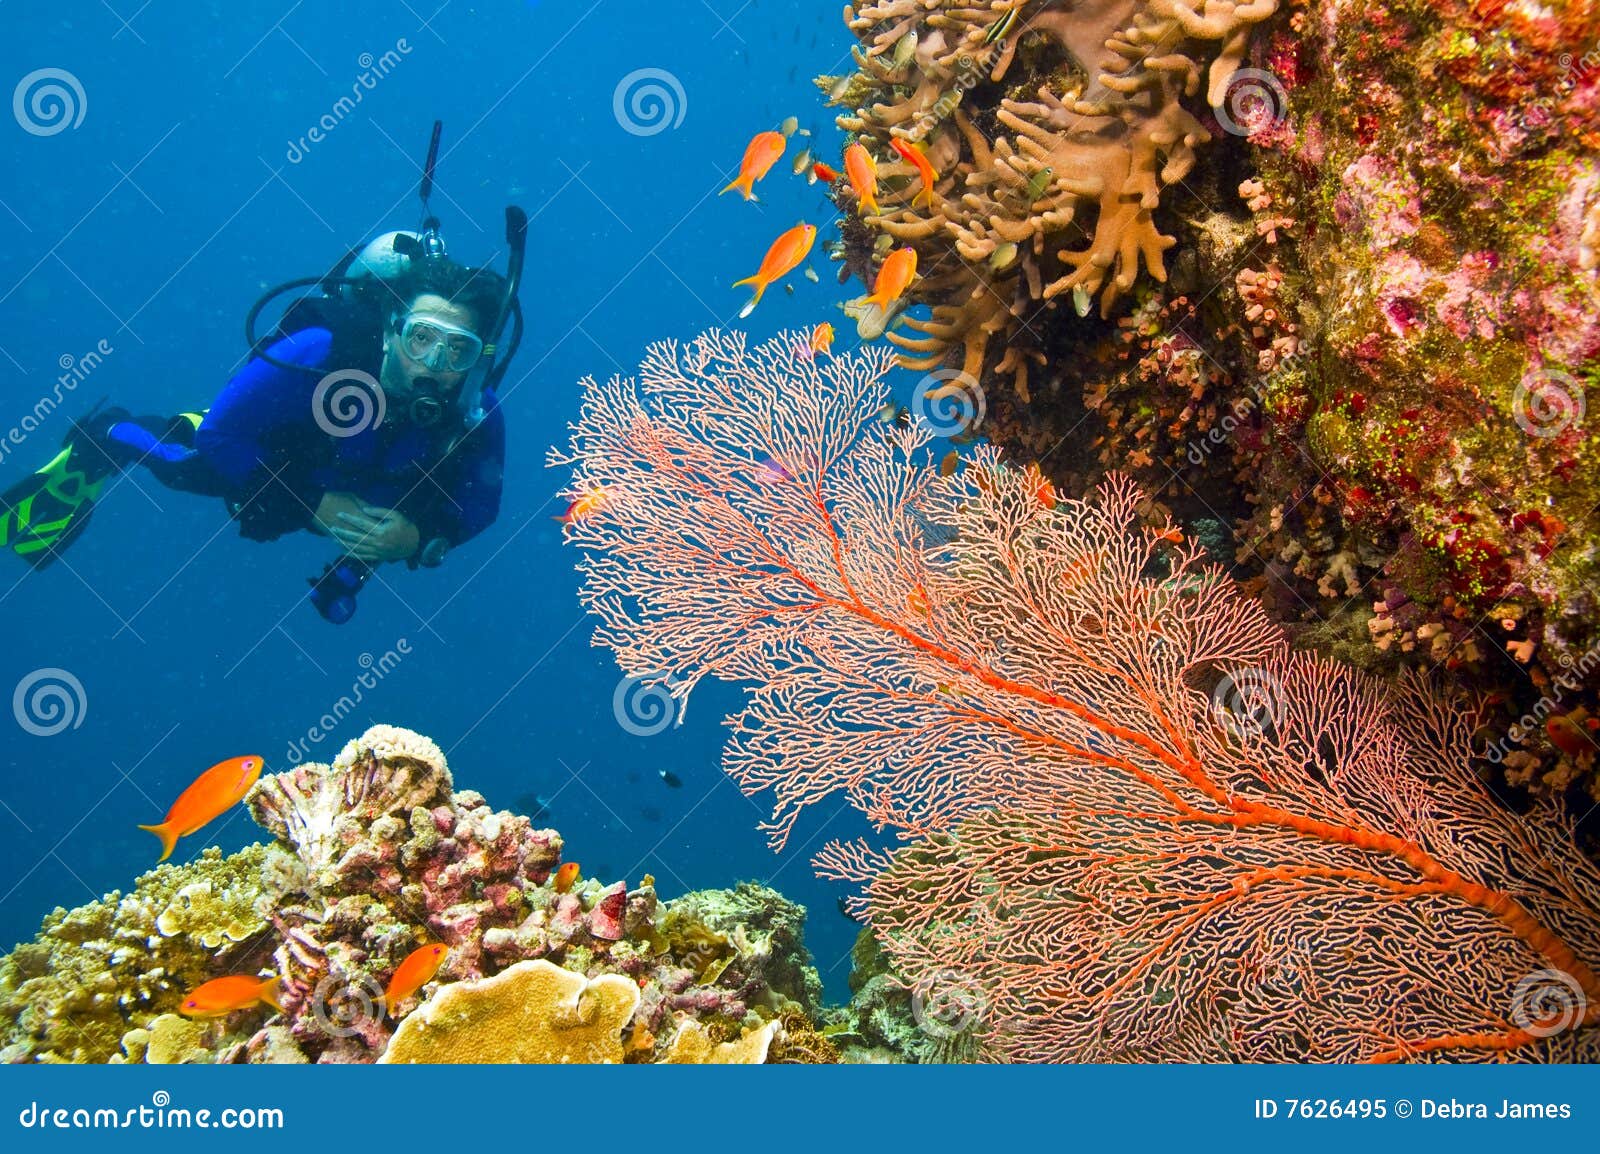 female scuba diver viewing gorgonian sea fan